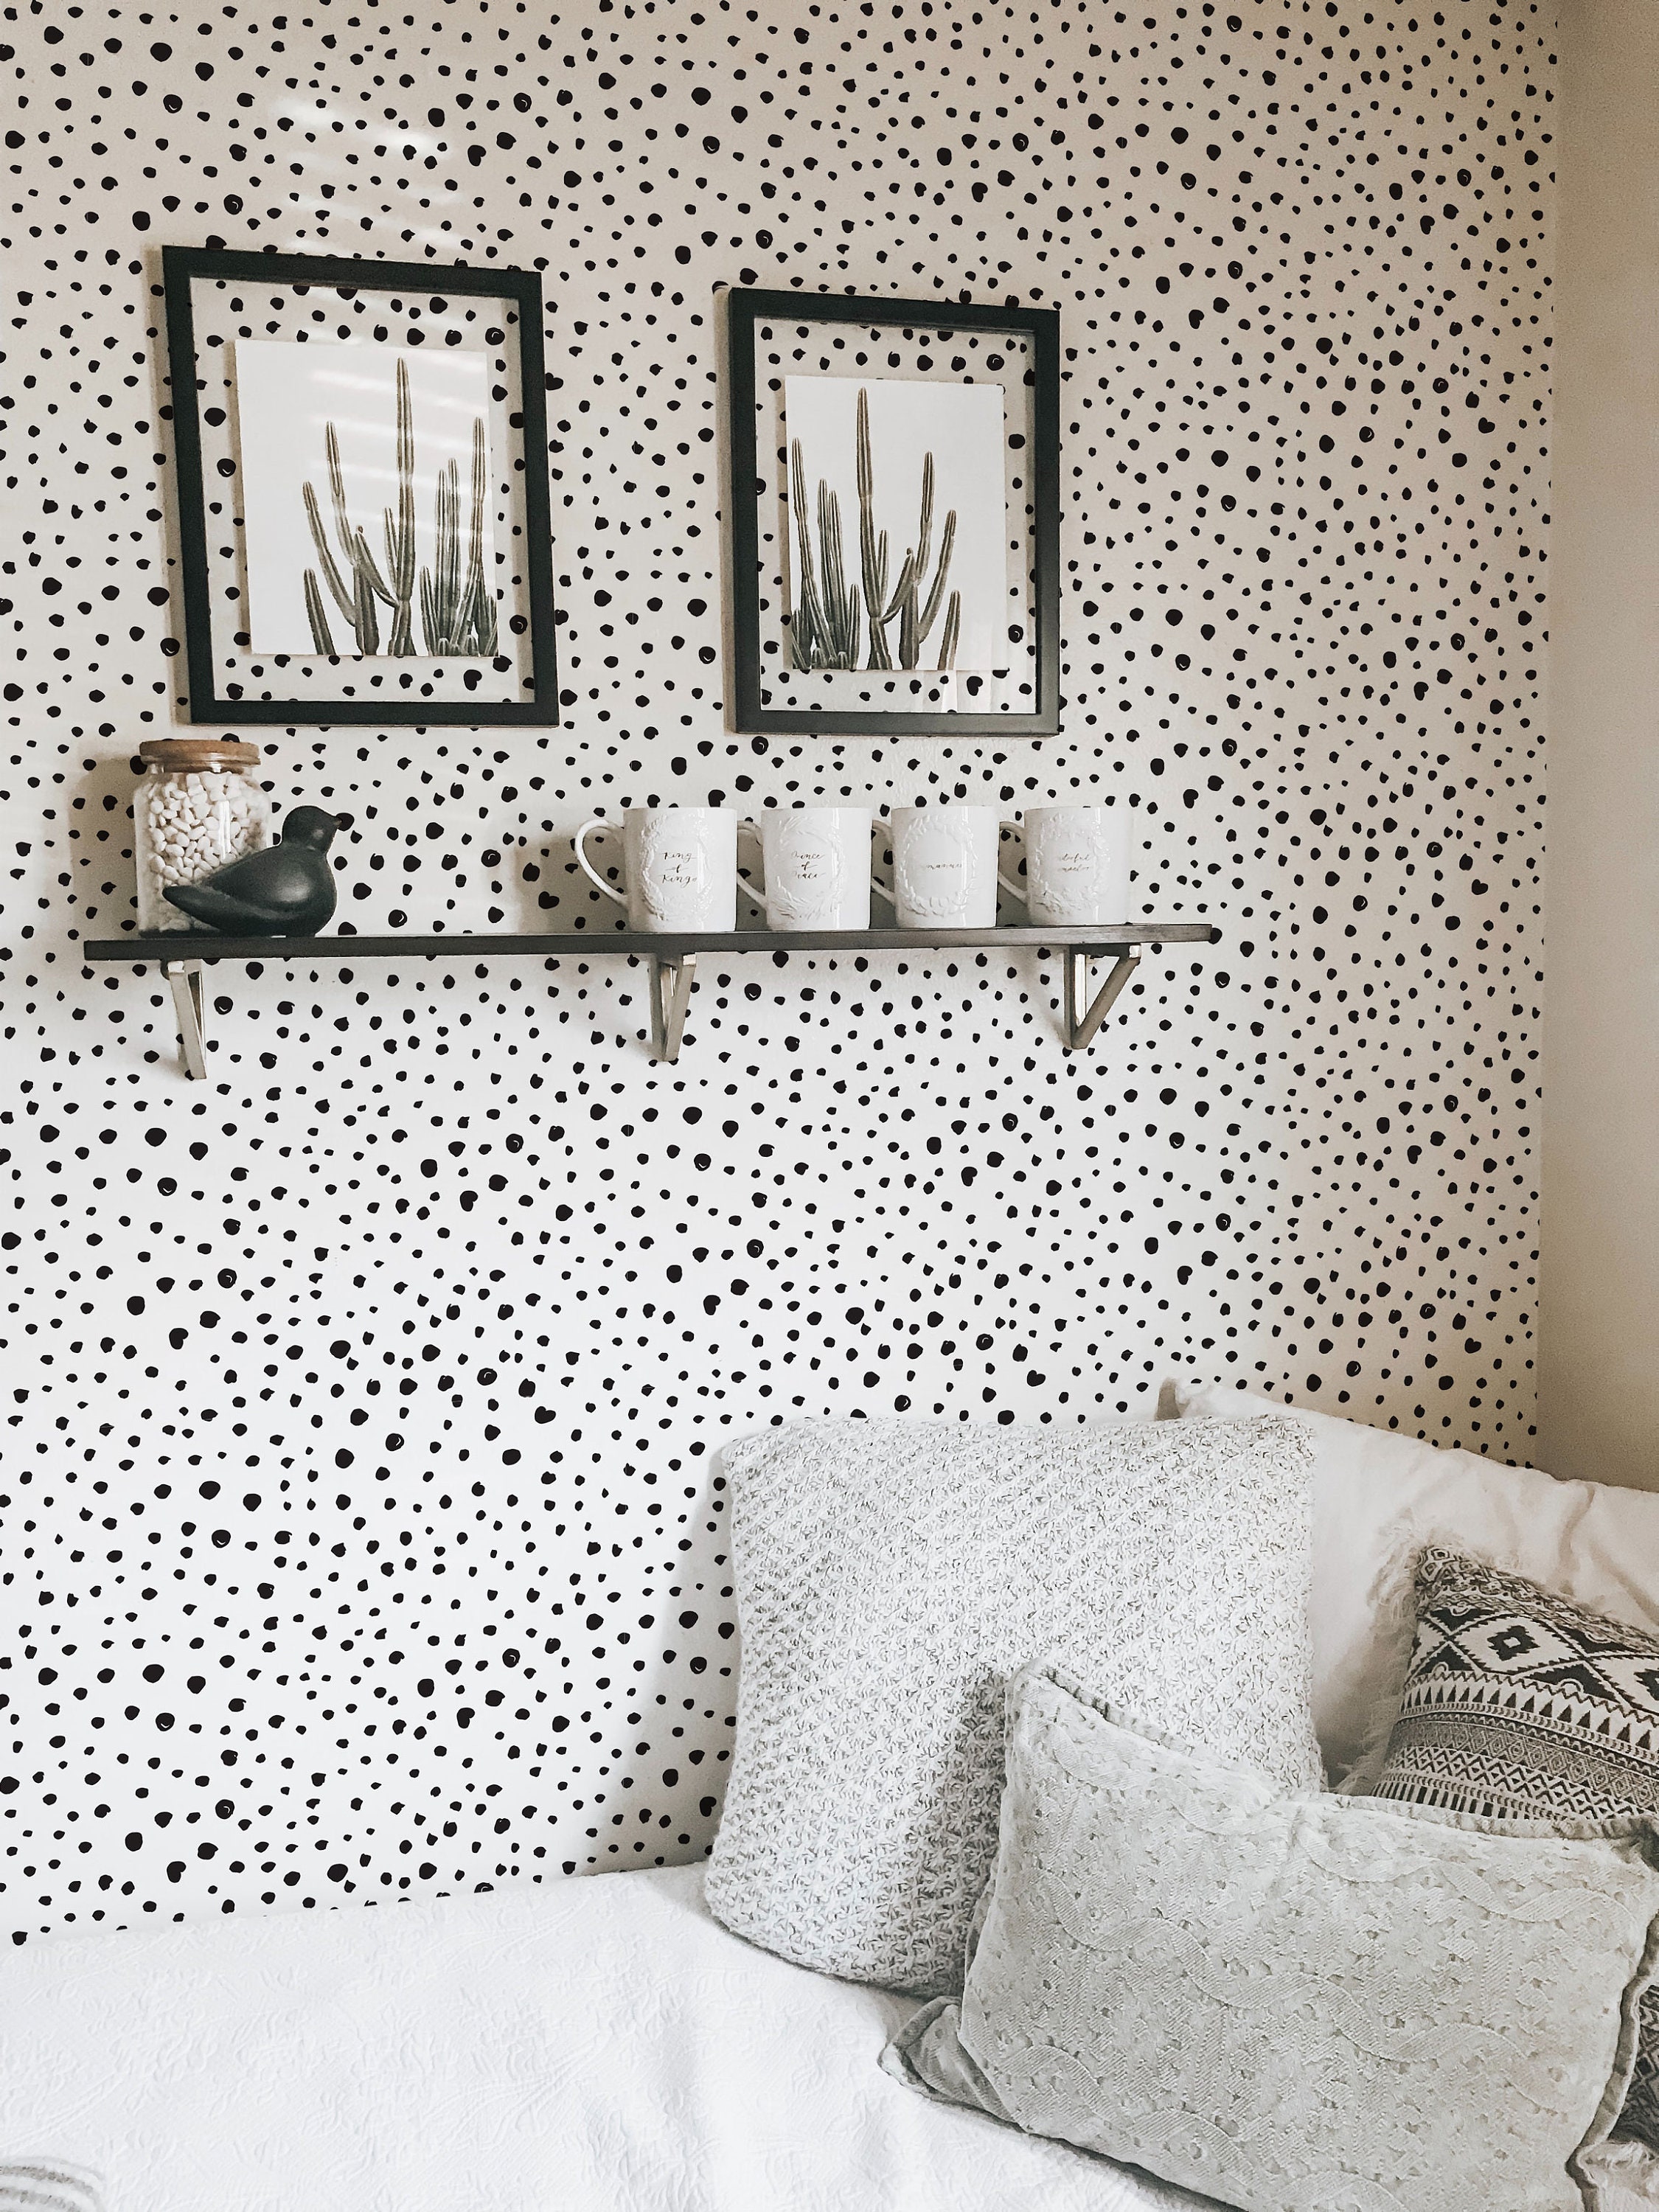 Speckled Dot Self Adhesive Wallpaper Black And White Polka Etsy Uk